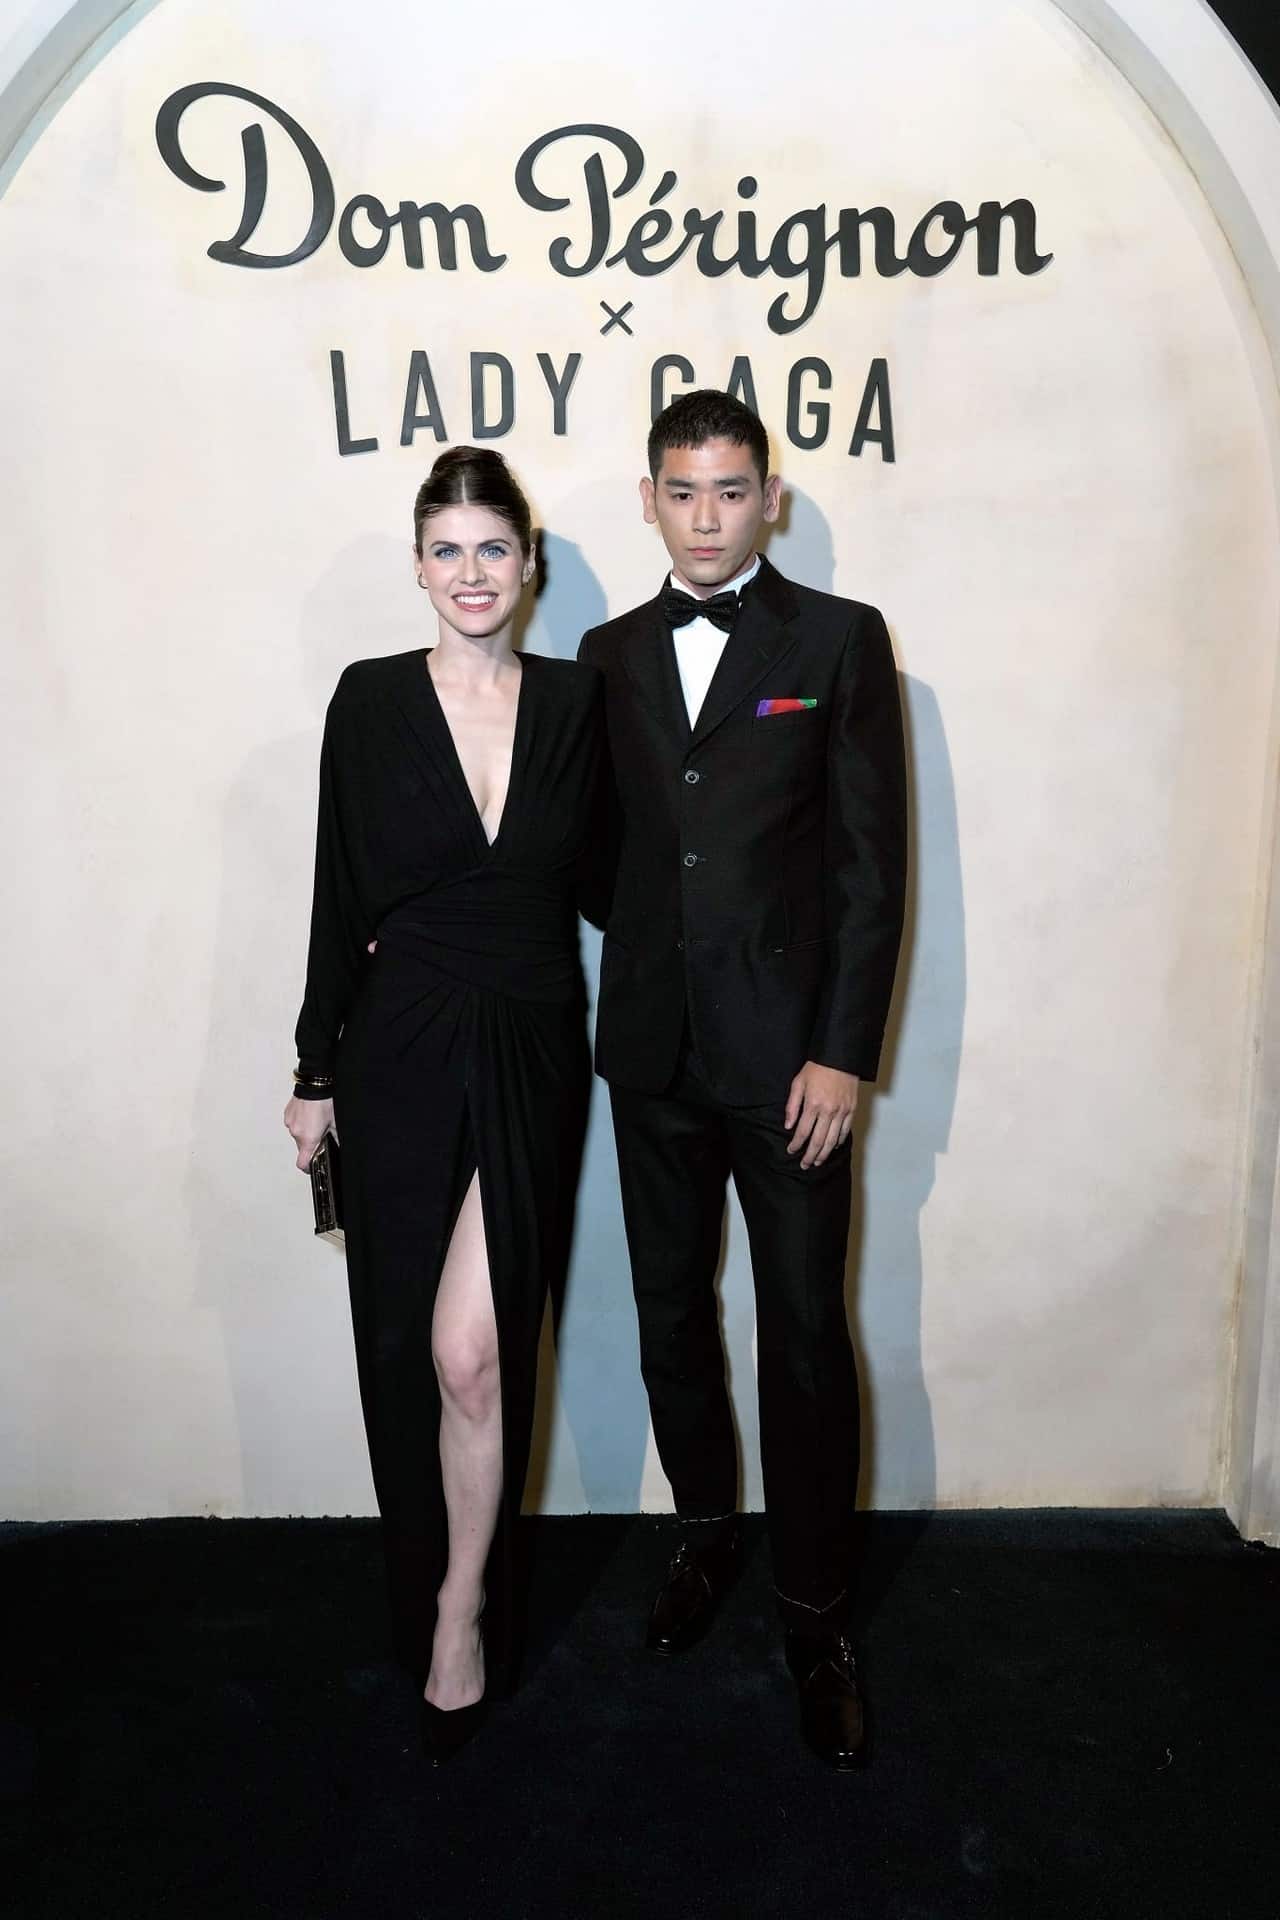 Alexandra Daddario in Black Ruched Dress at Lady Gaga's Dom Perignon Party